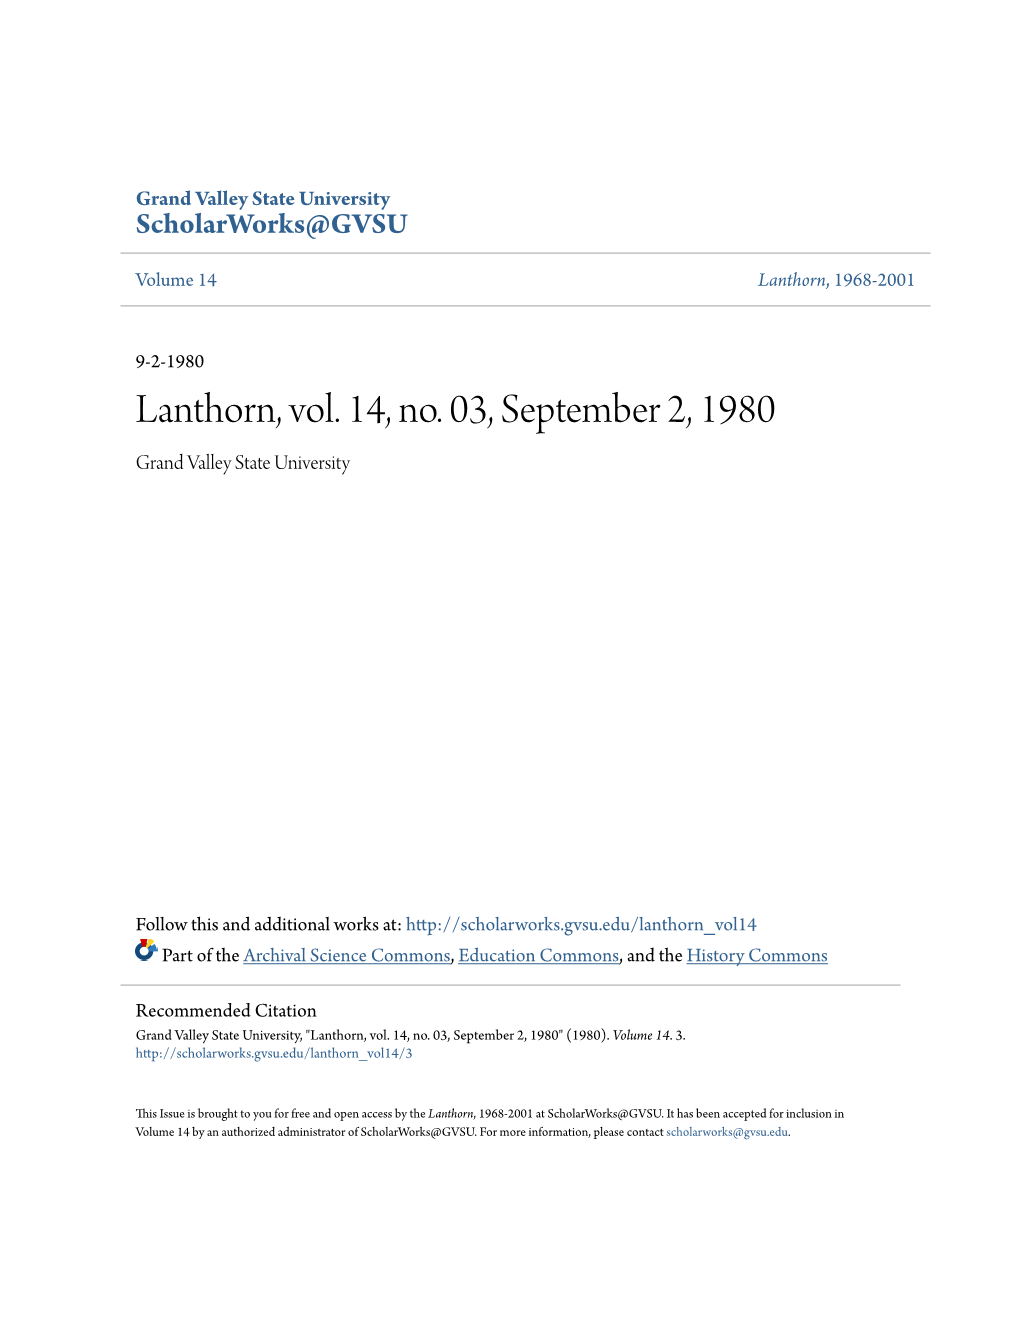 Lanthorn, Vol. 14, No. 03, September 2, 1980 Grand Valley State University